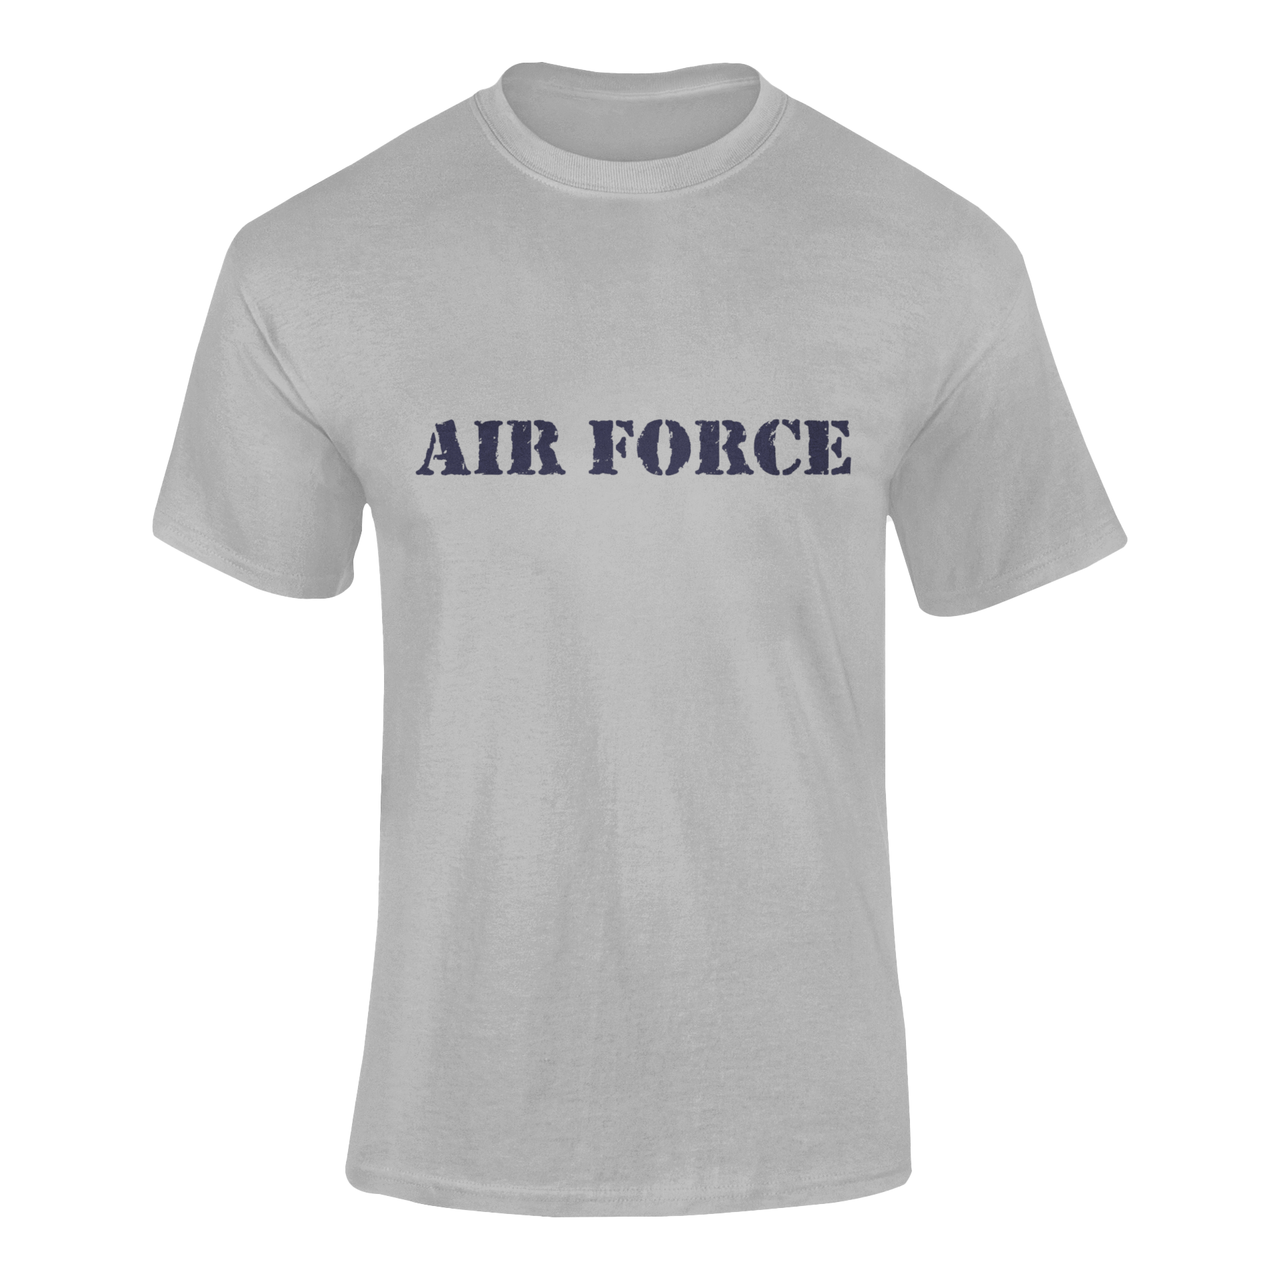 Military T-shirt - Air Force (Men)